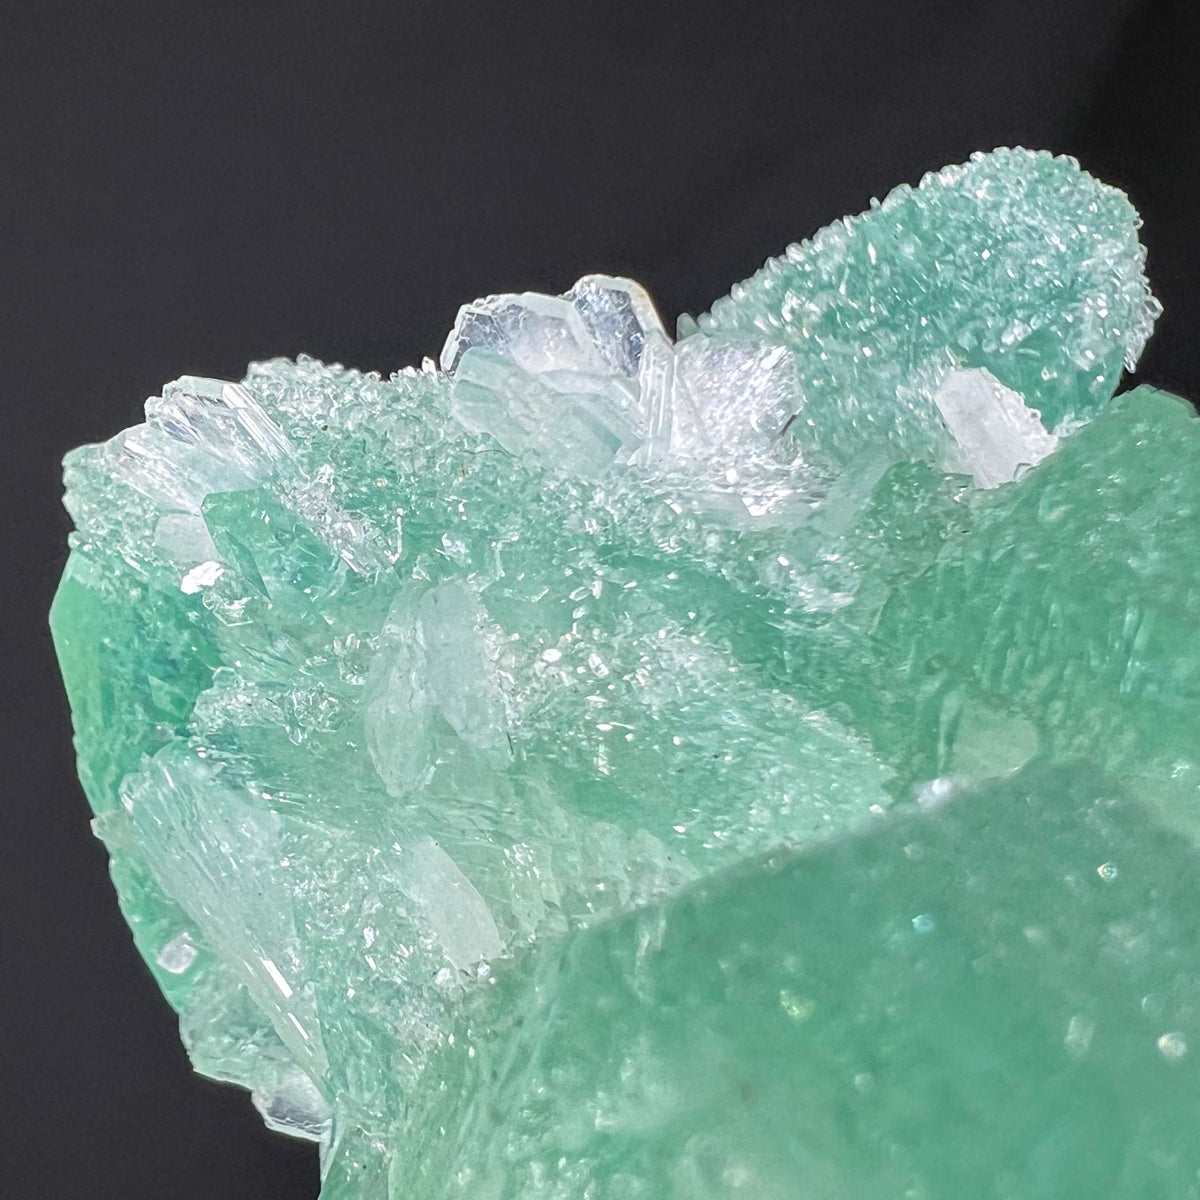 Close Up View of Drusy Apophyllite, White Stilbite and Green Apophyllite Crystals